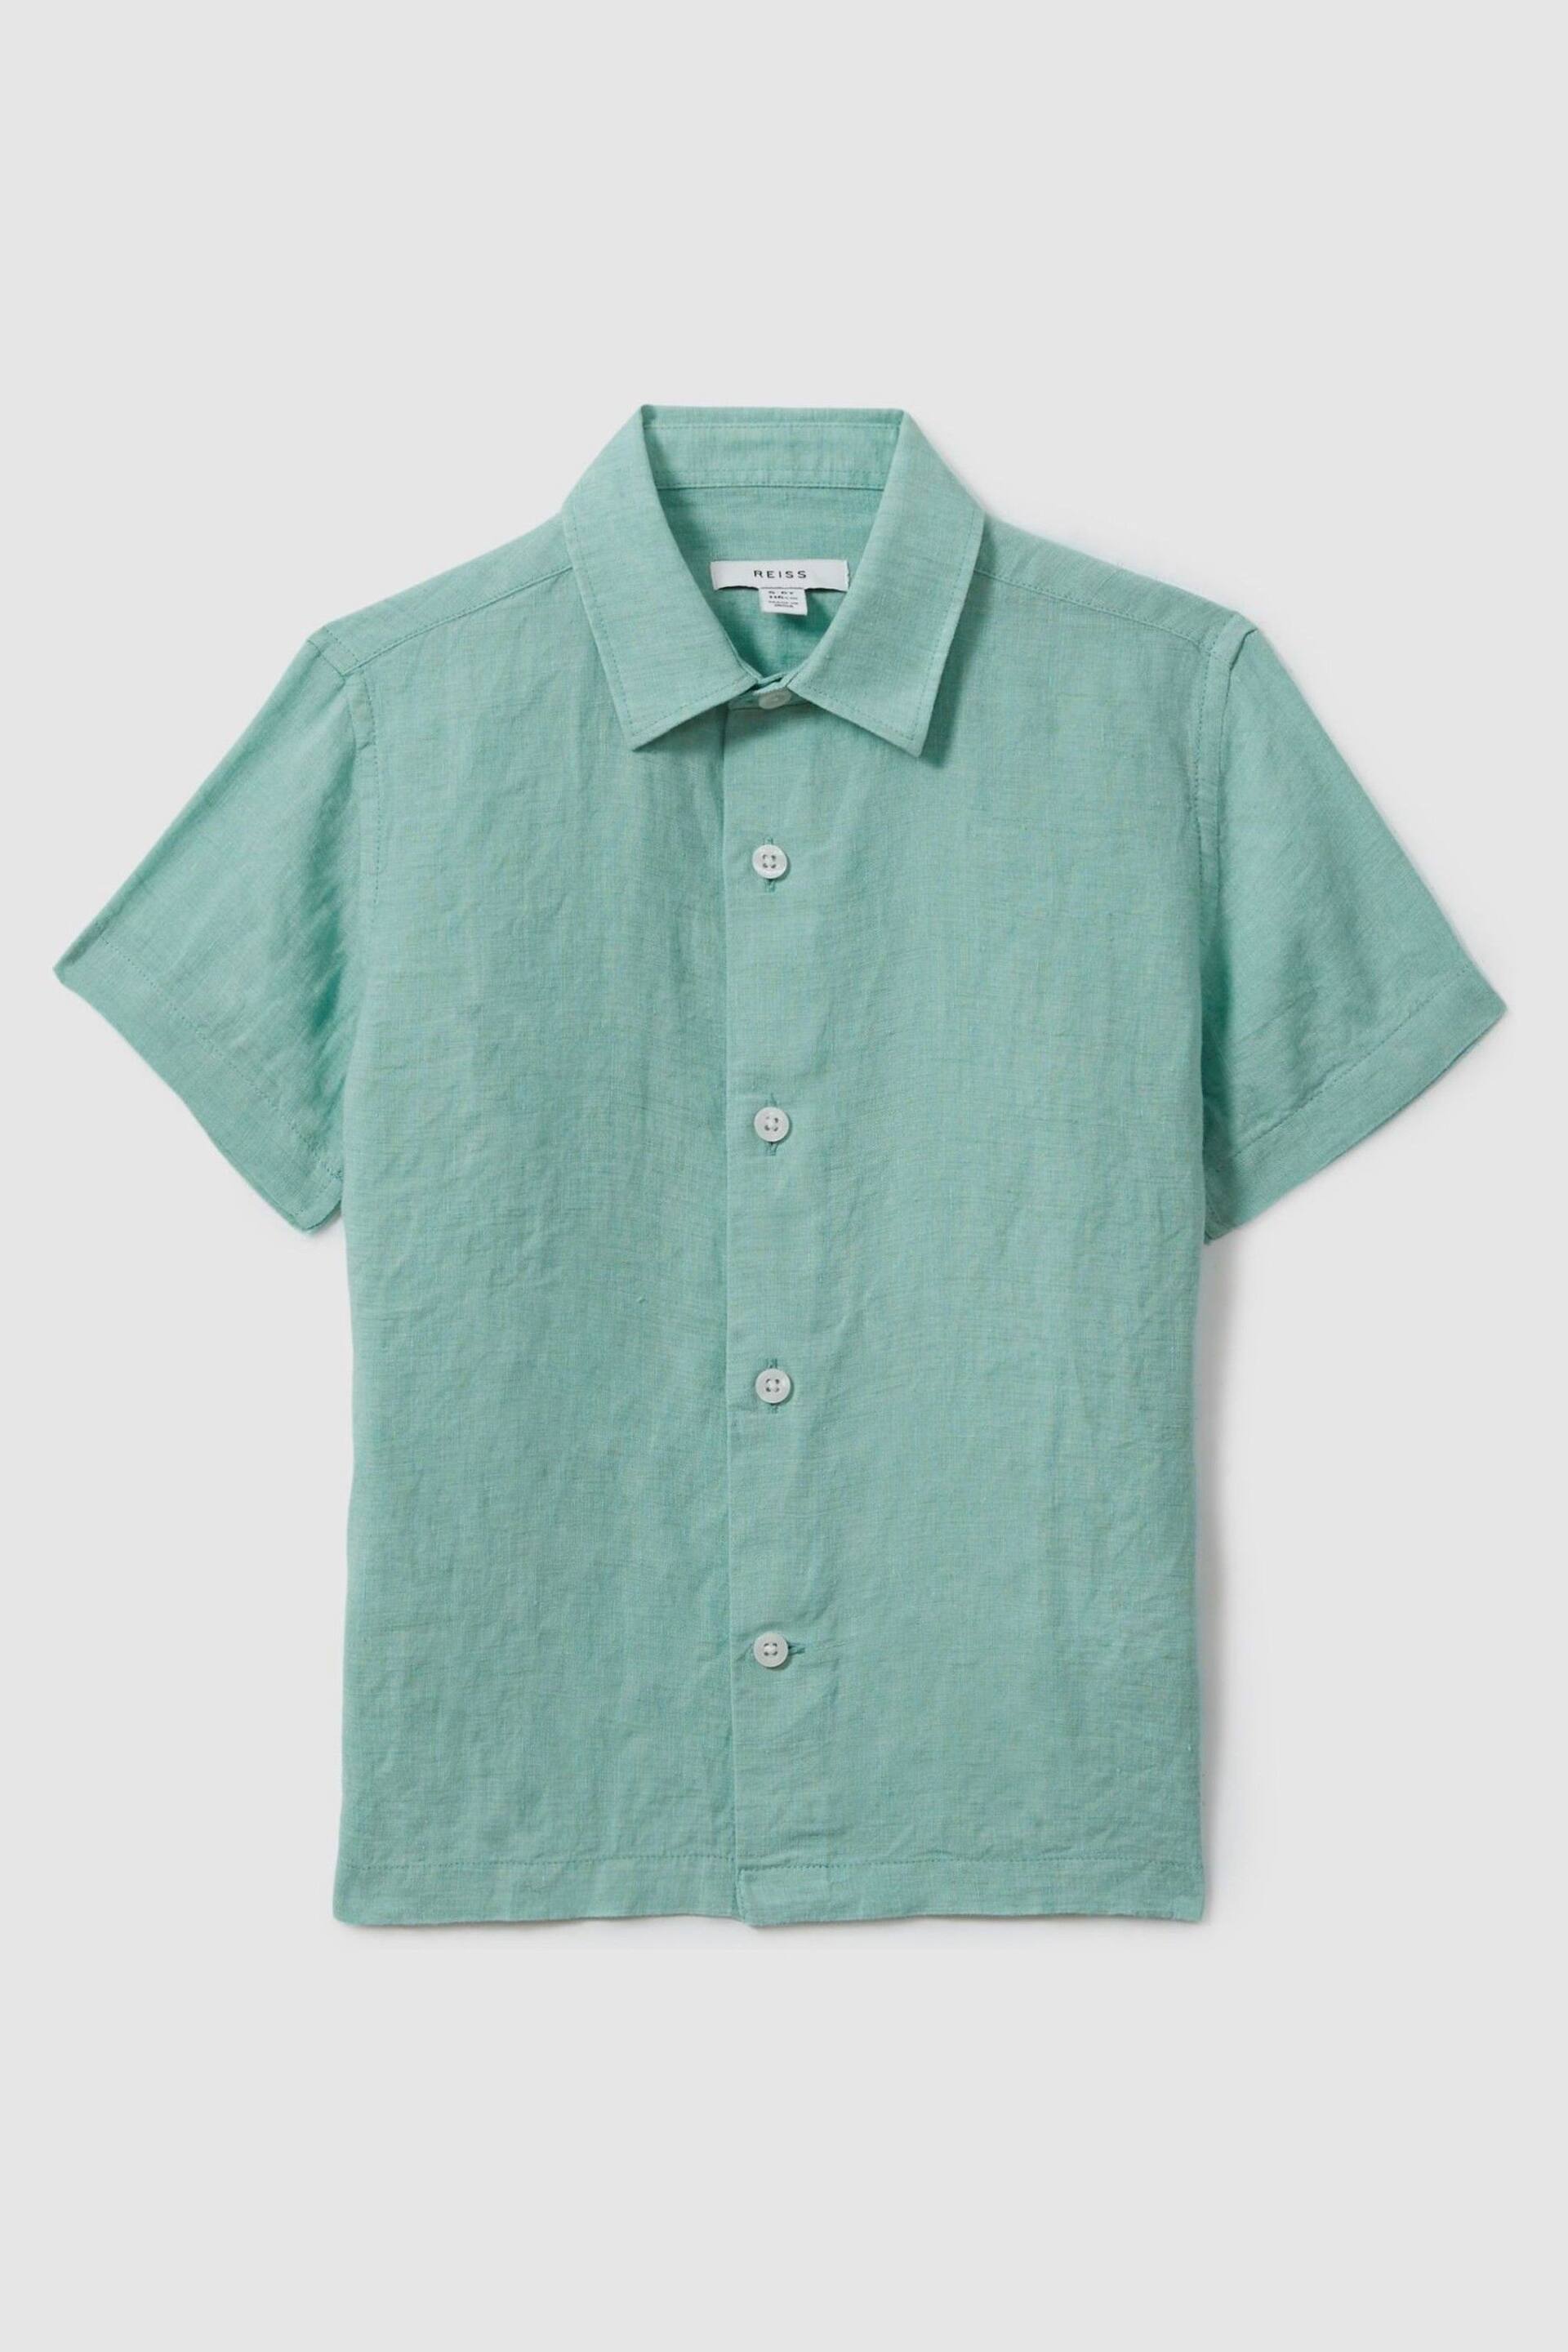 Reiss Bermuda Green Holiday Junior Short Sleeve Linen Shirt - Image 1 of 3